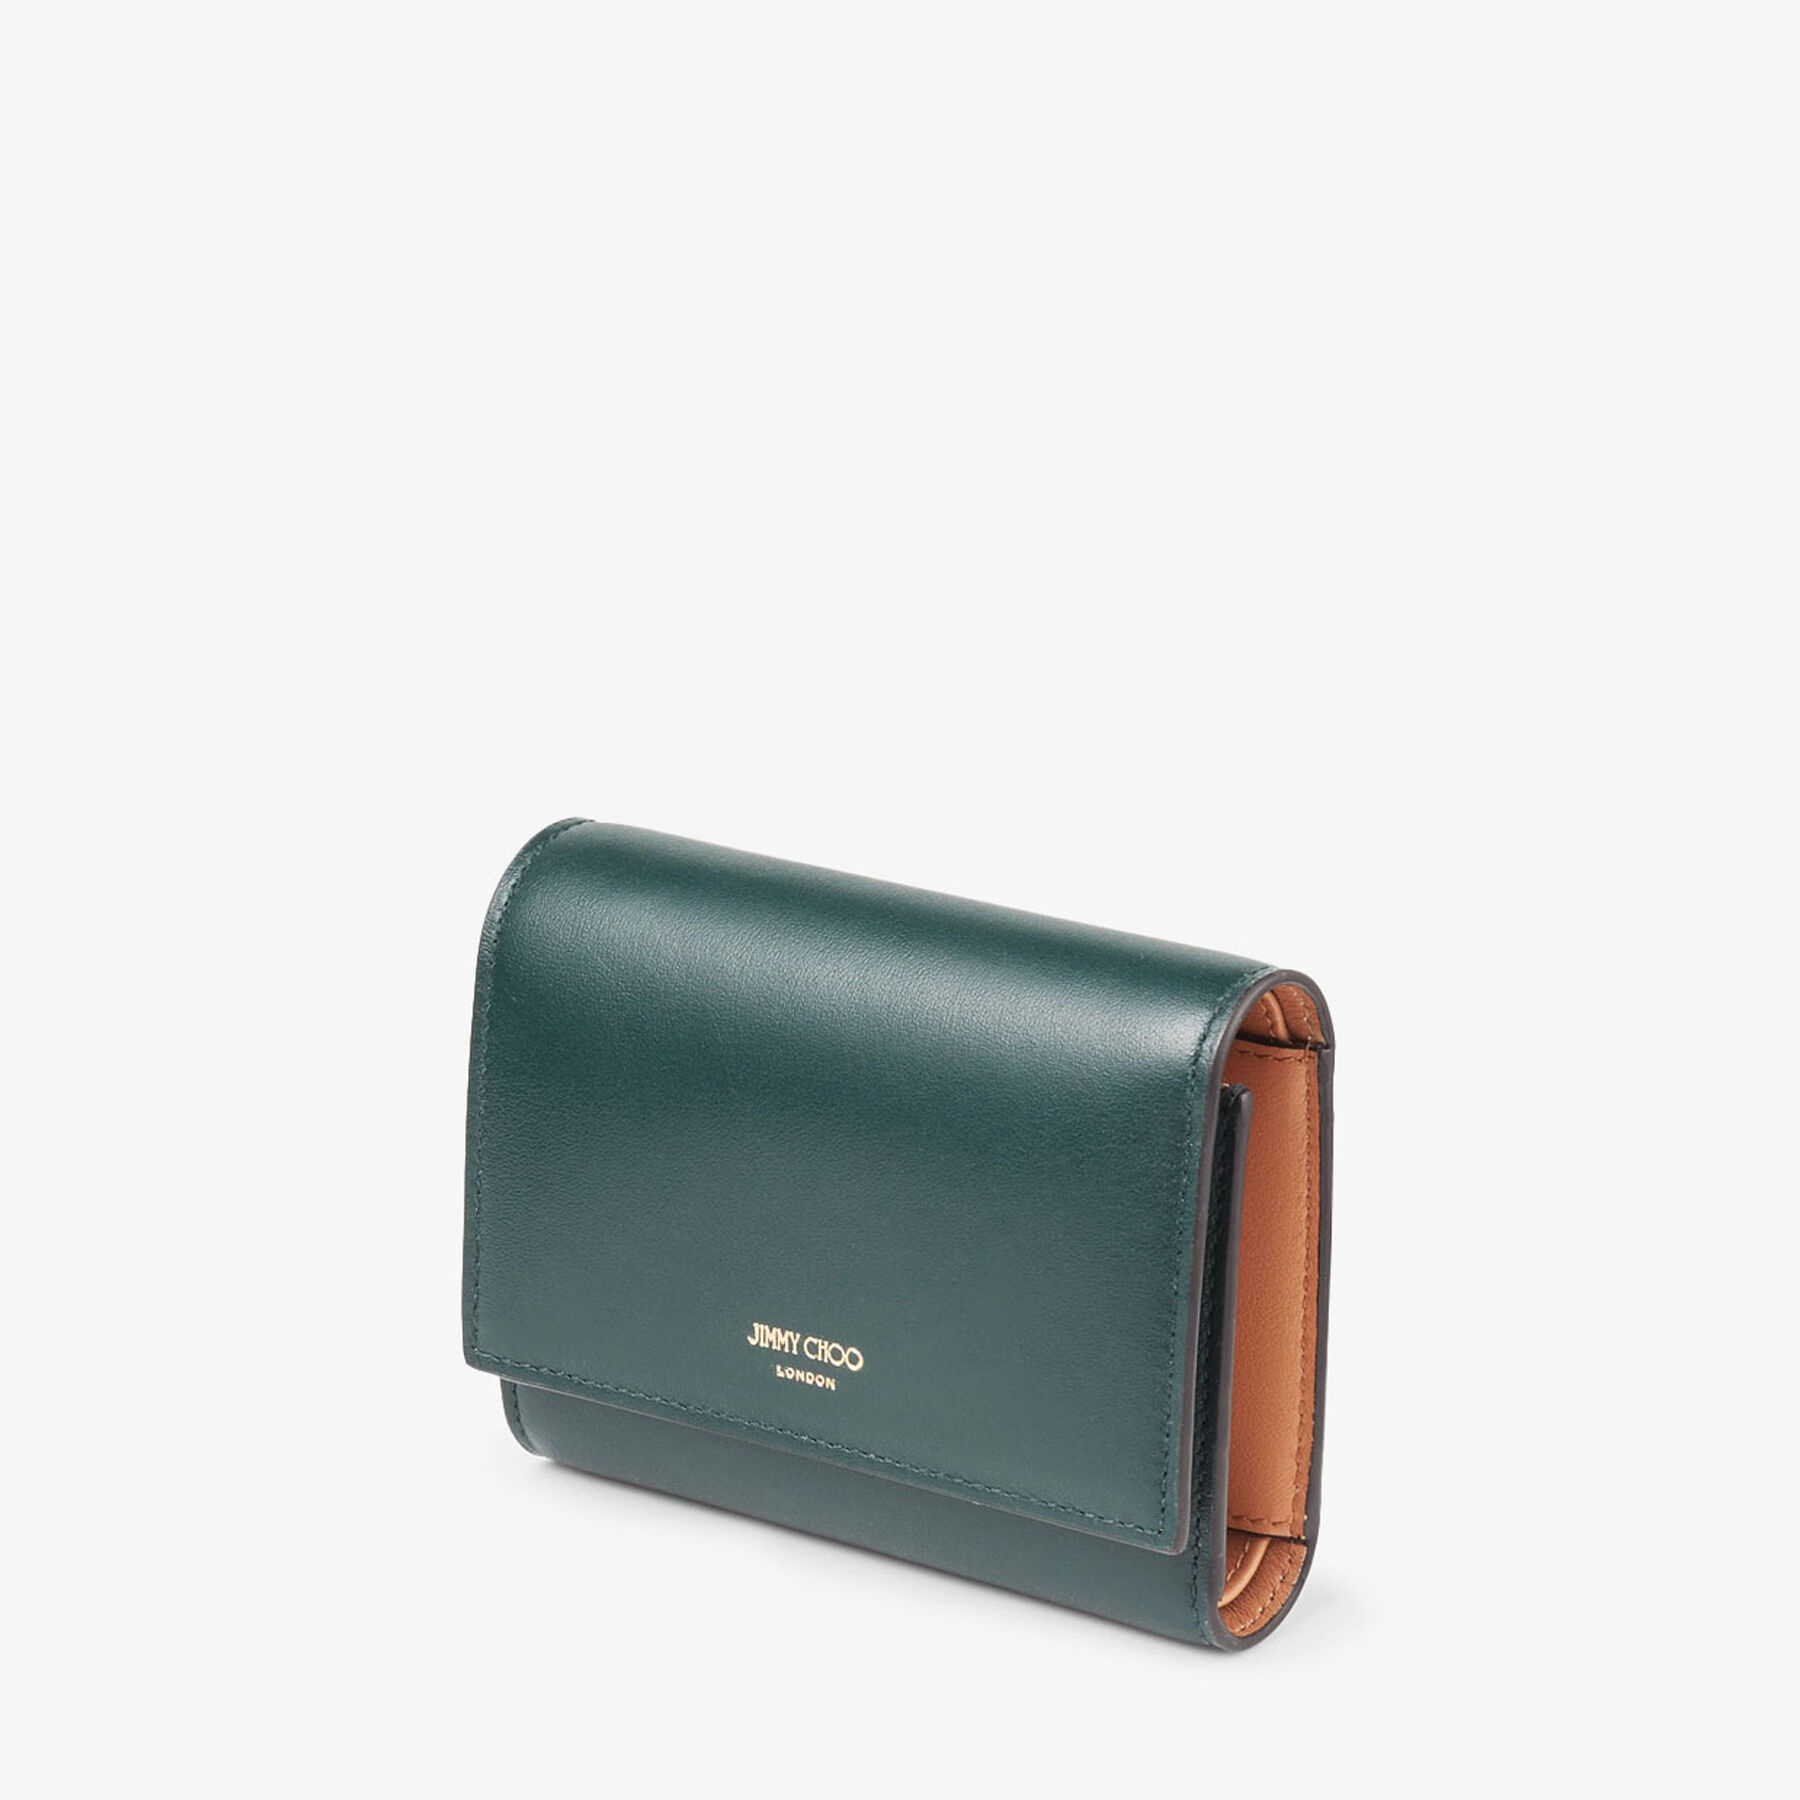 Marinda
Dark Green and Biscuit Bi-Colour Leather Wallet - 2